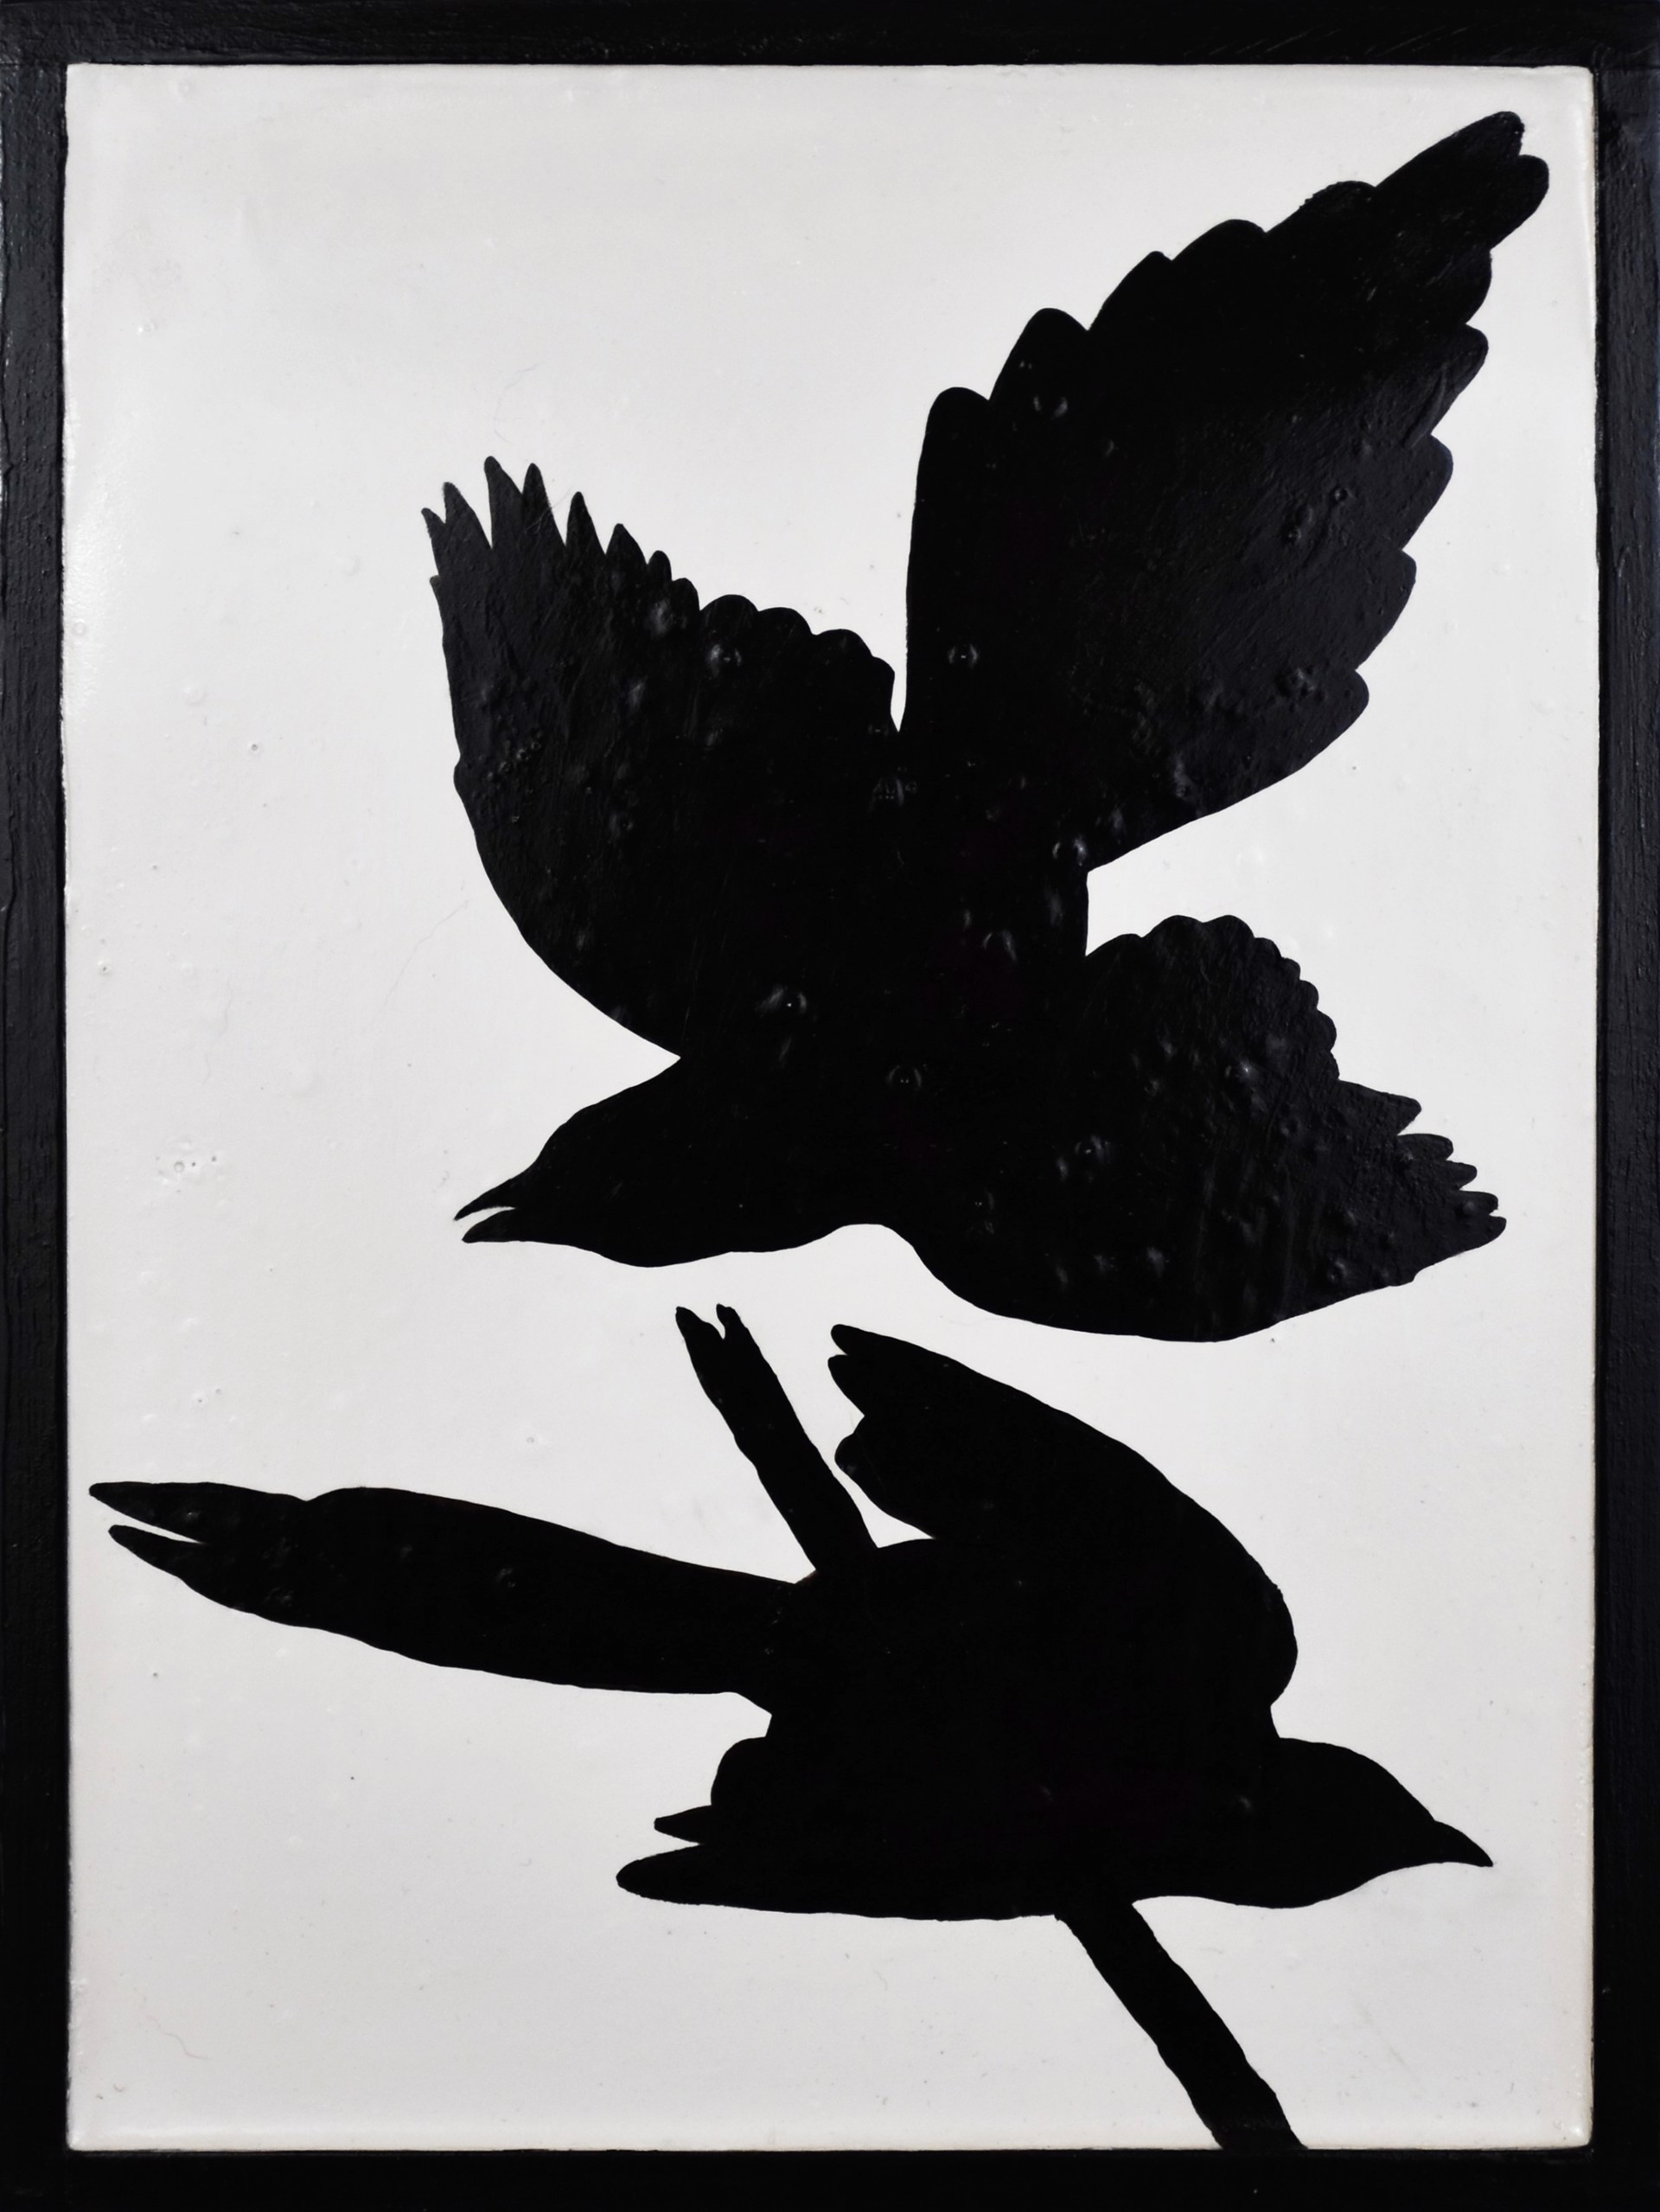 Black-billed Magpie by Tim Hunter